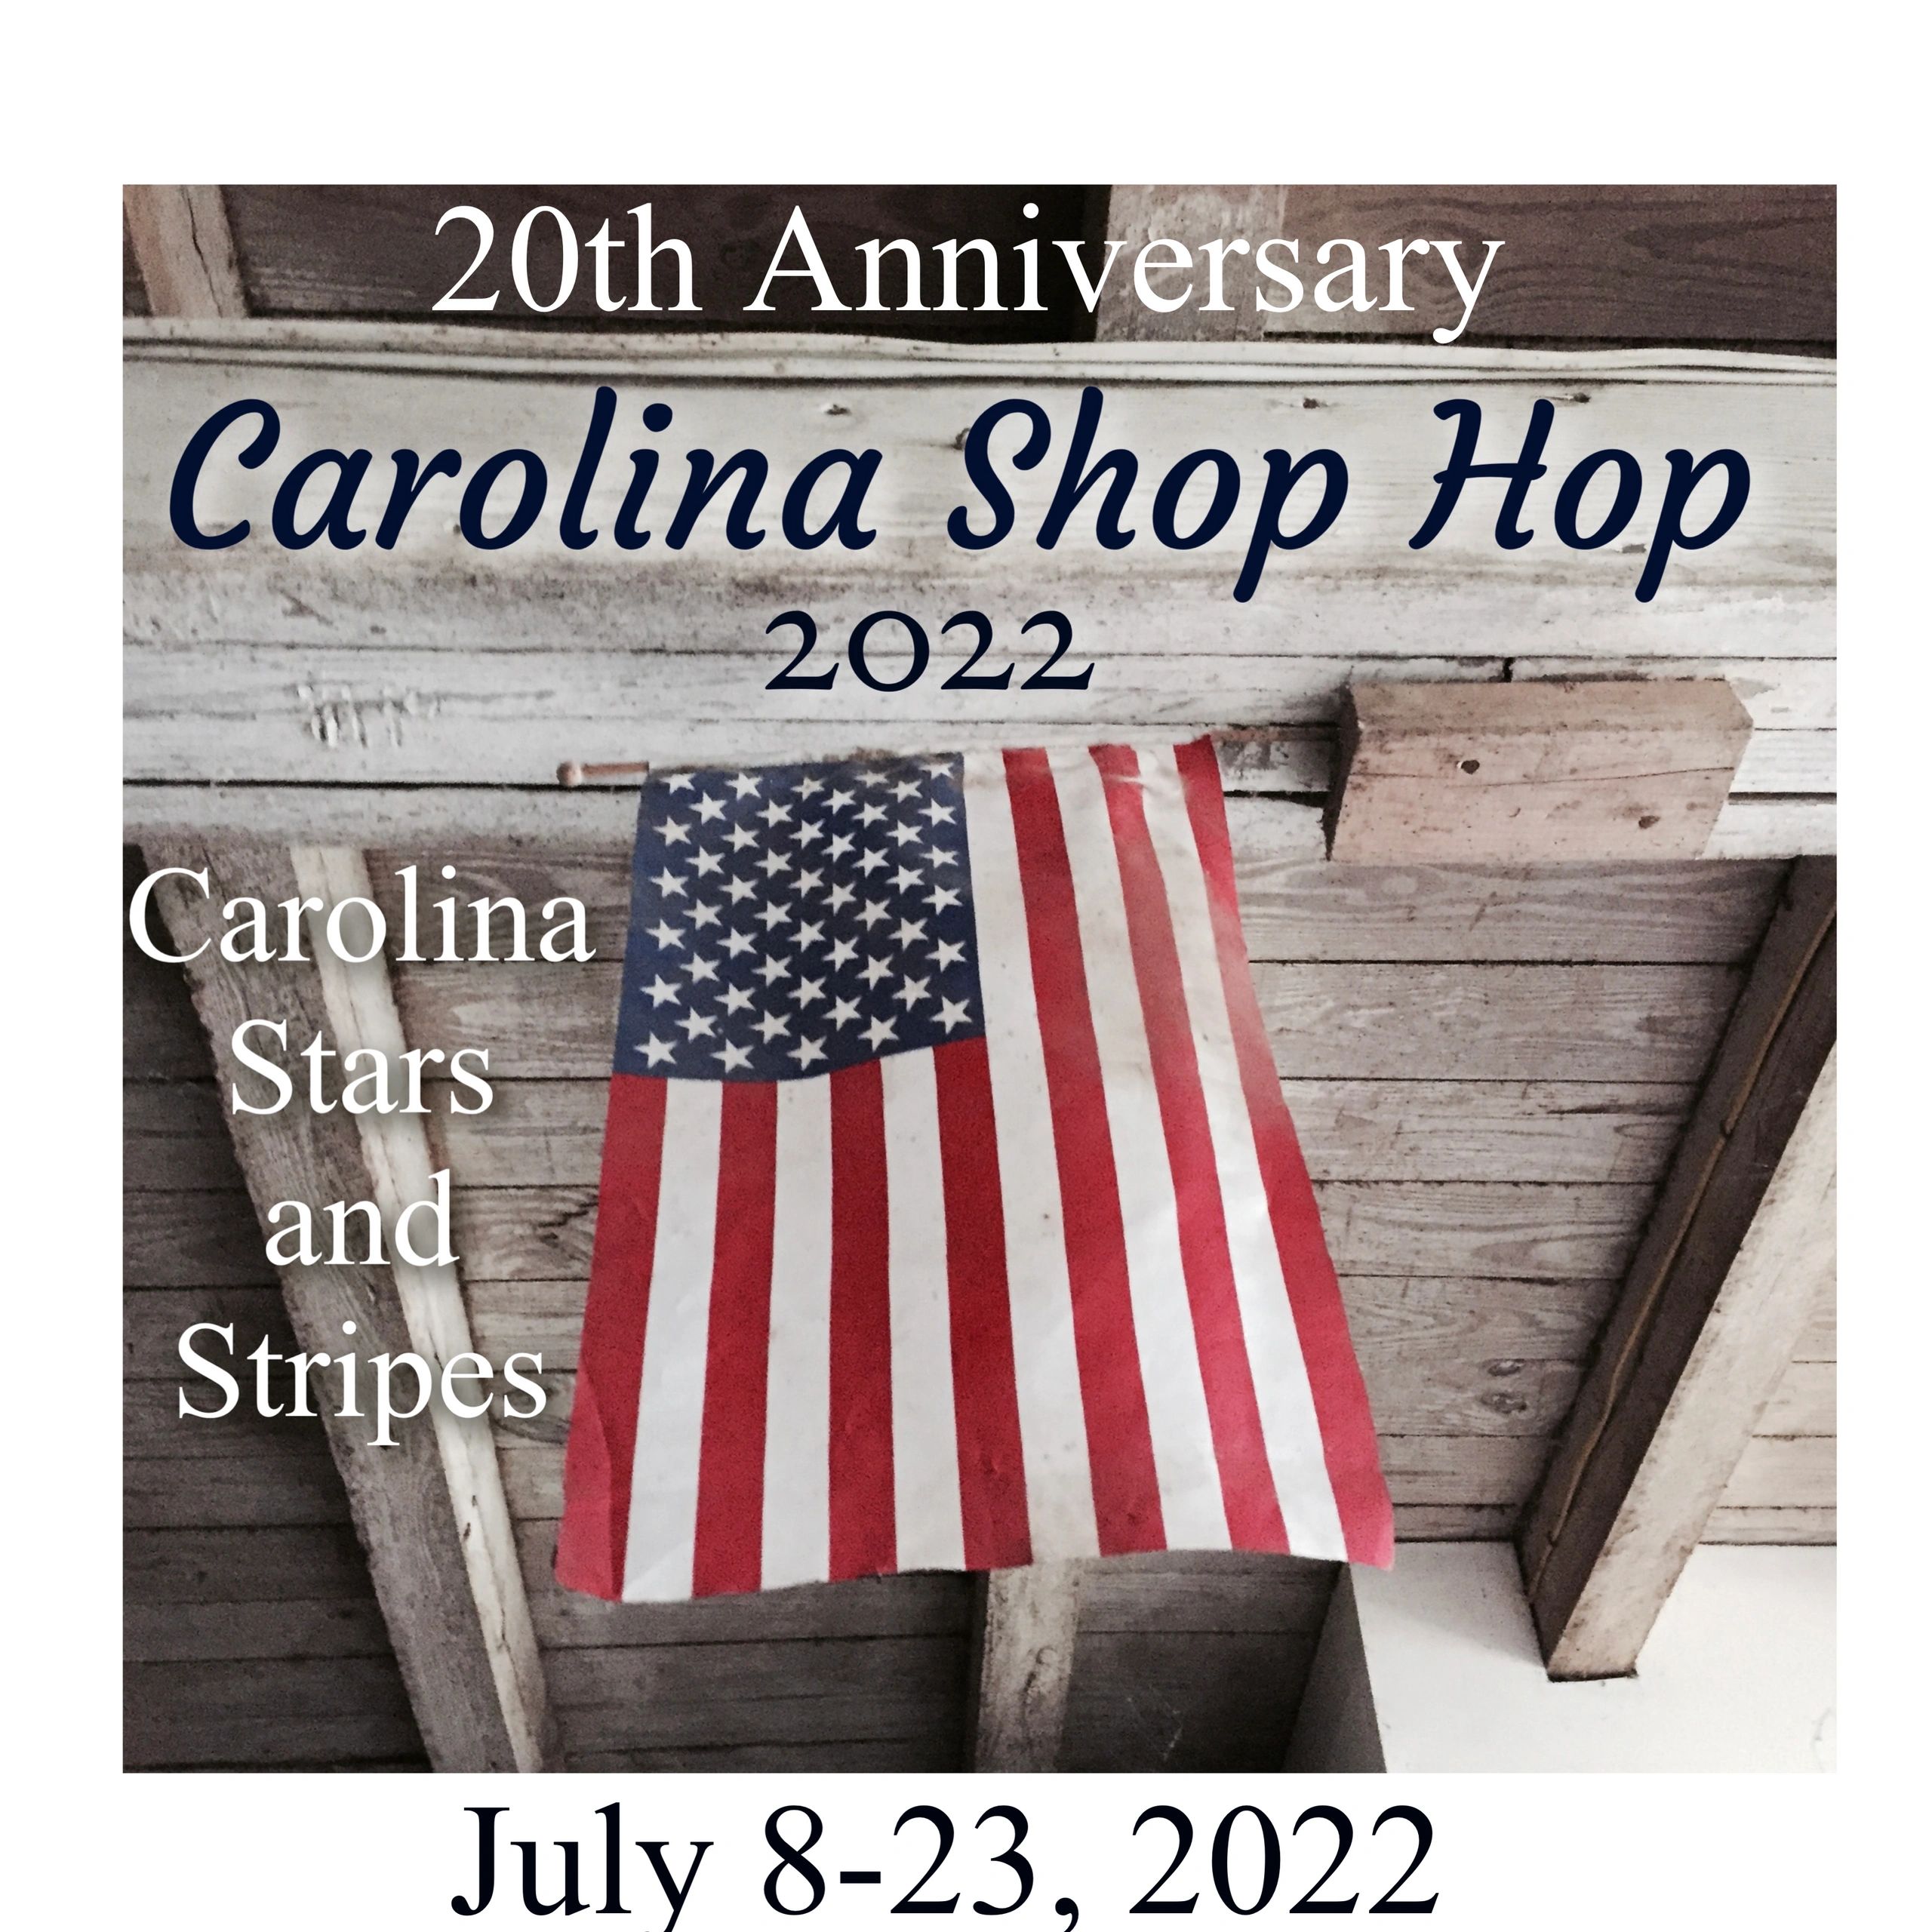 Carolina Shop Hop